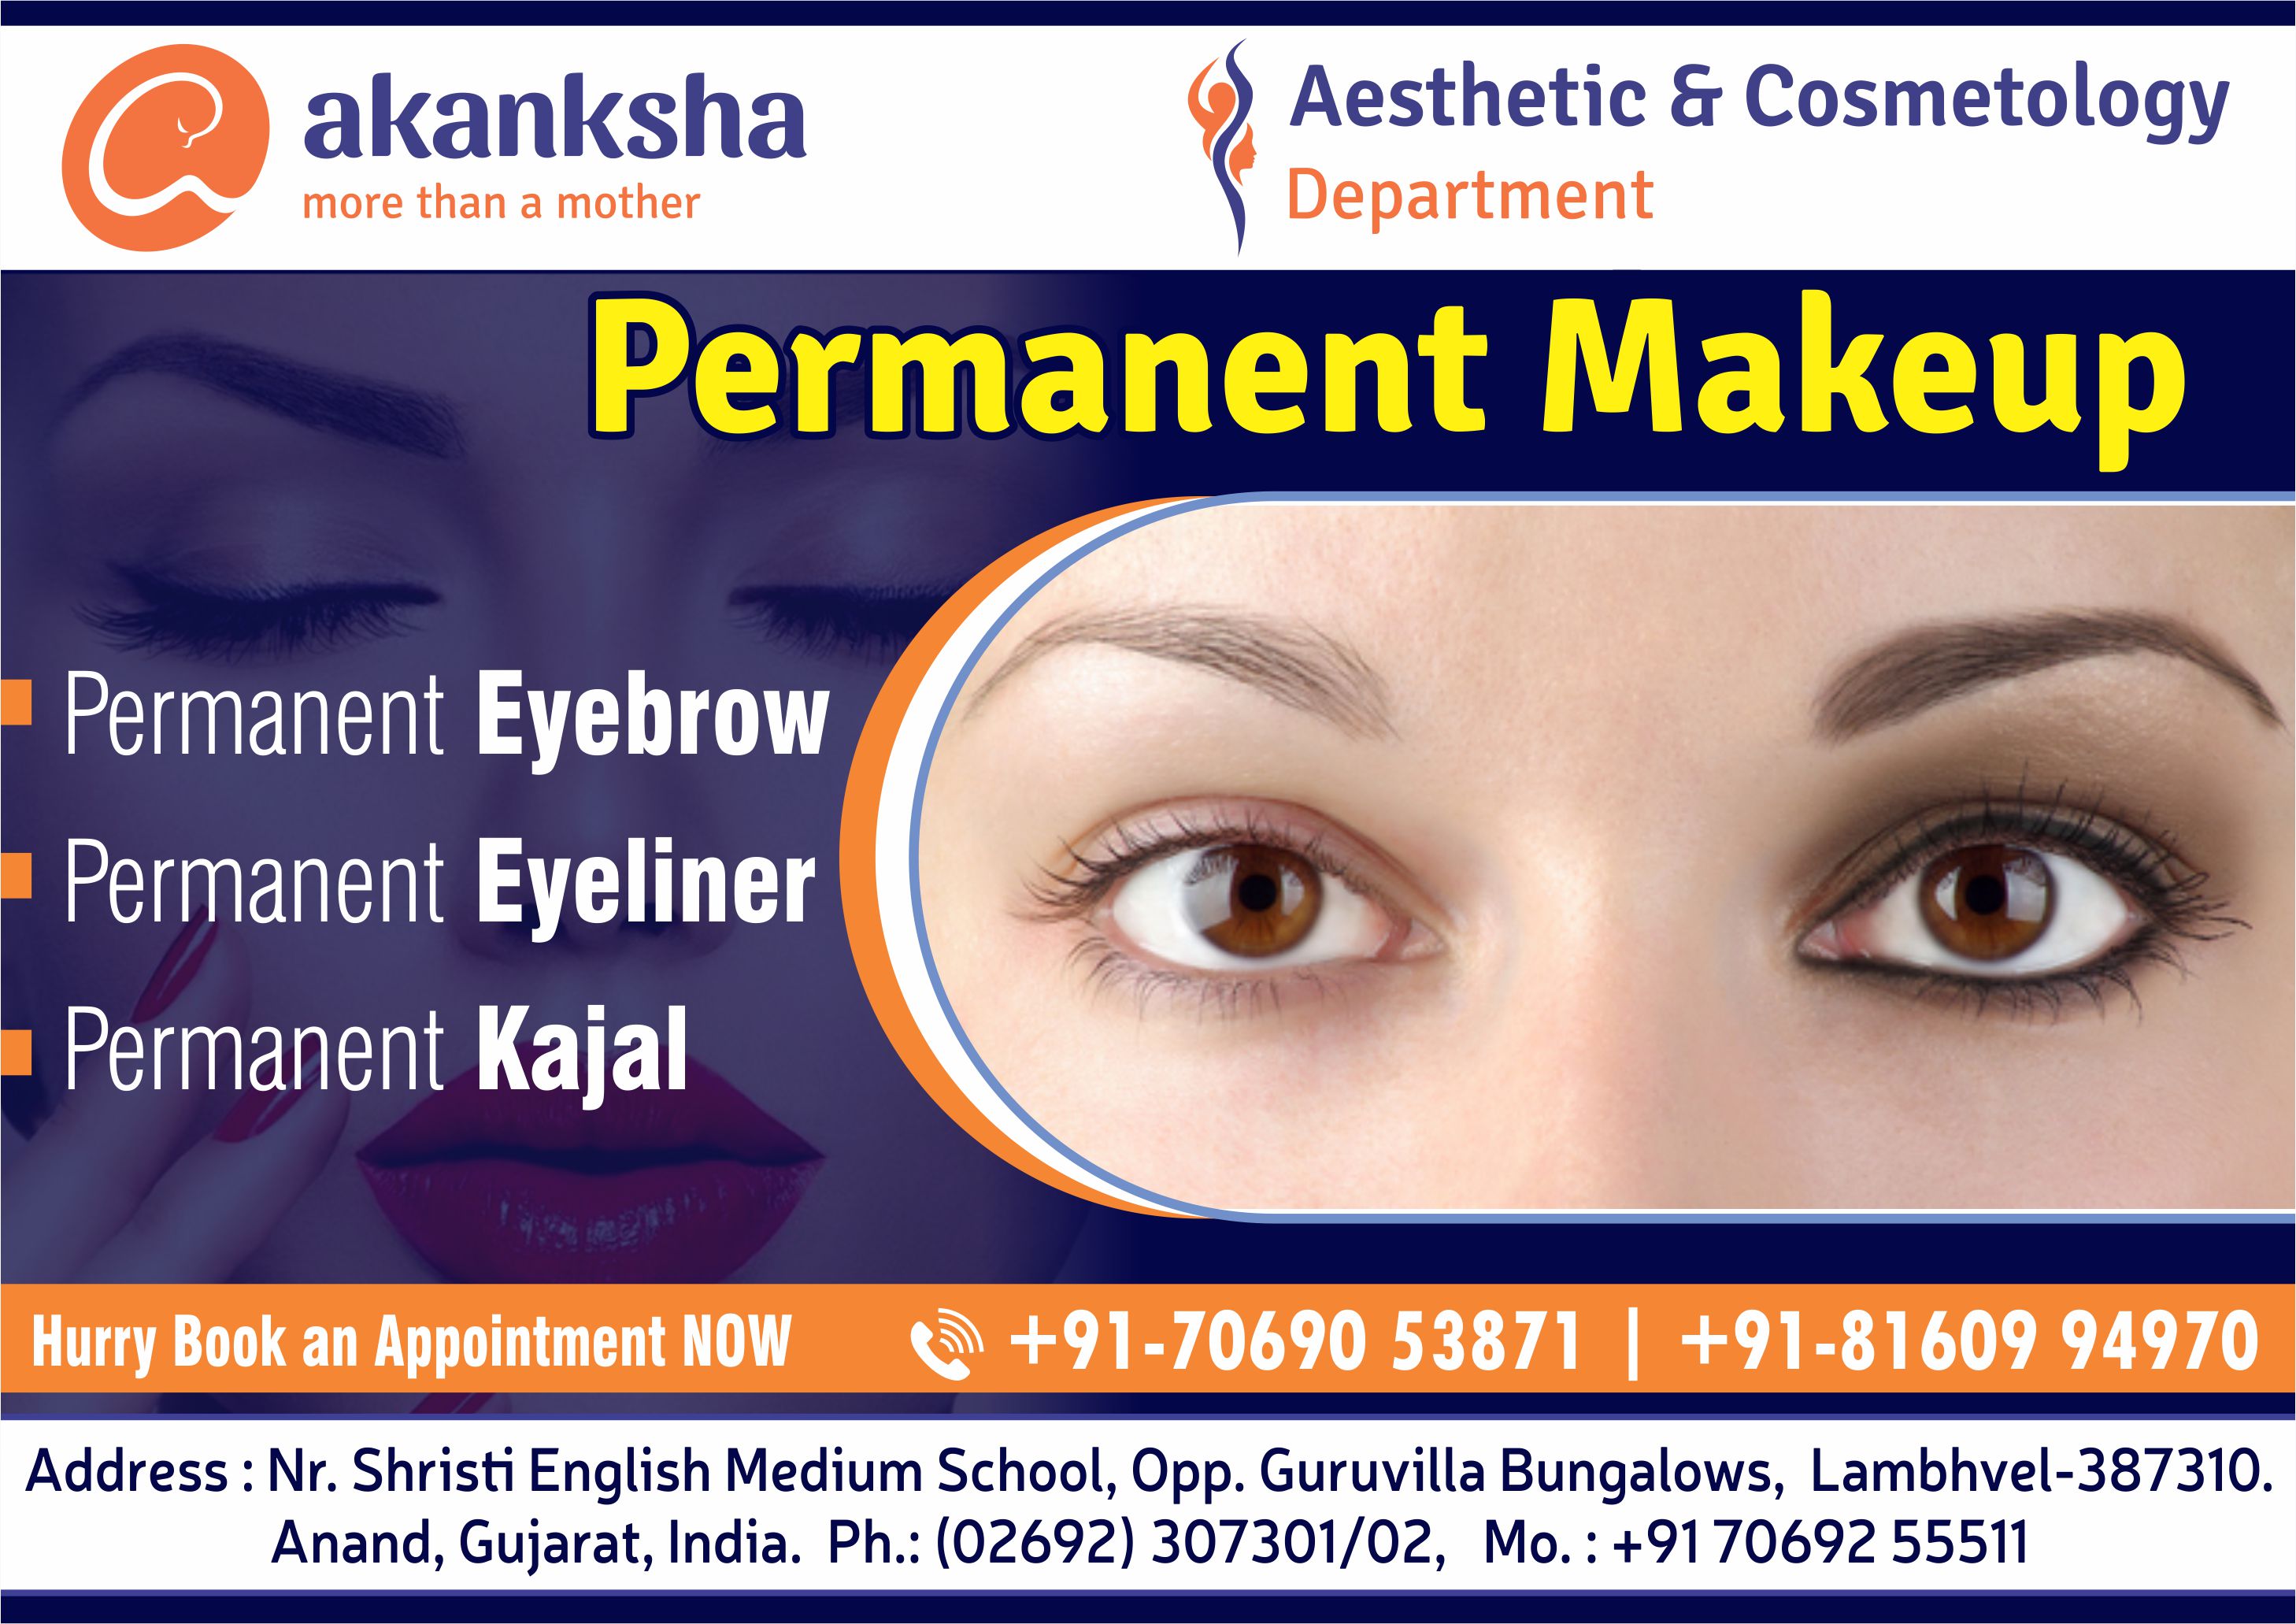 Permanent Makeup like Permanent Eyebrow, Permanent Eyeliner and Permanent Kajal at Akanksha Hospital